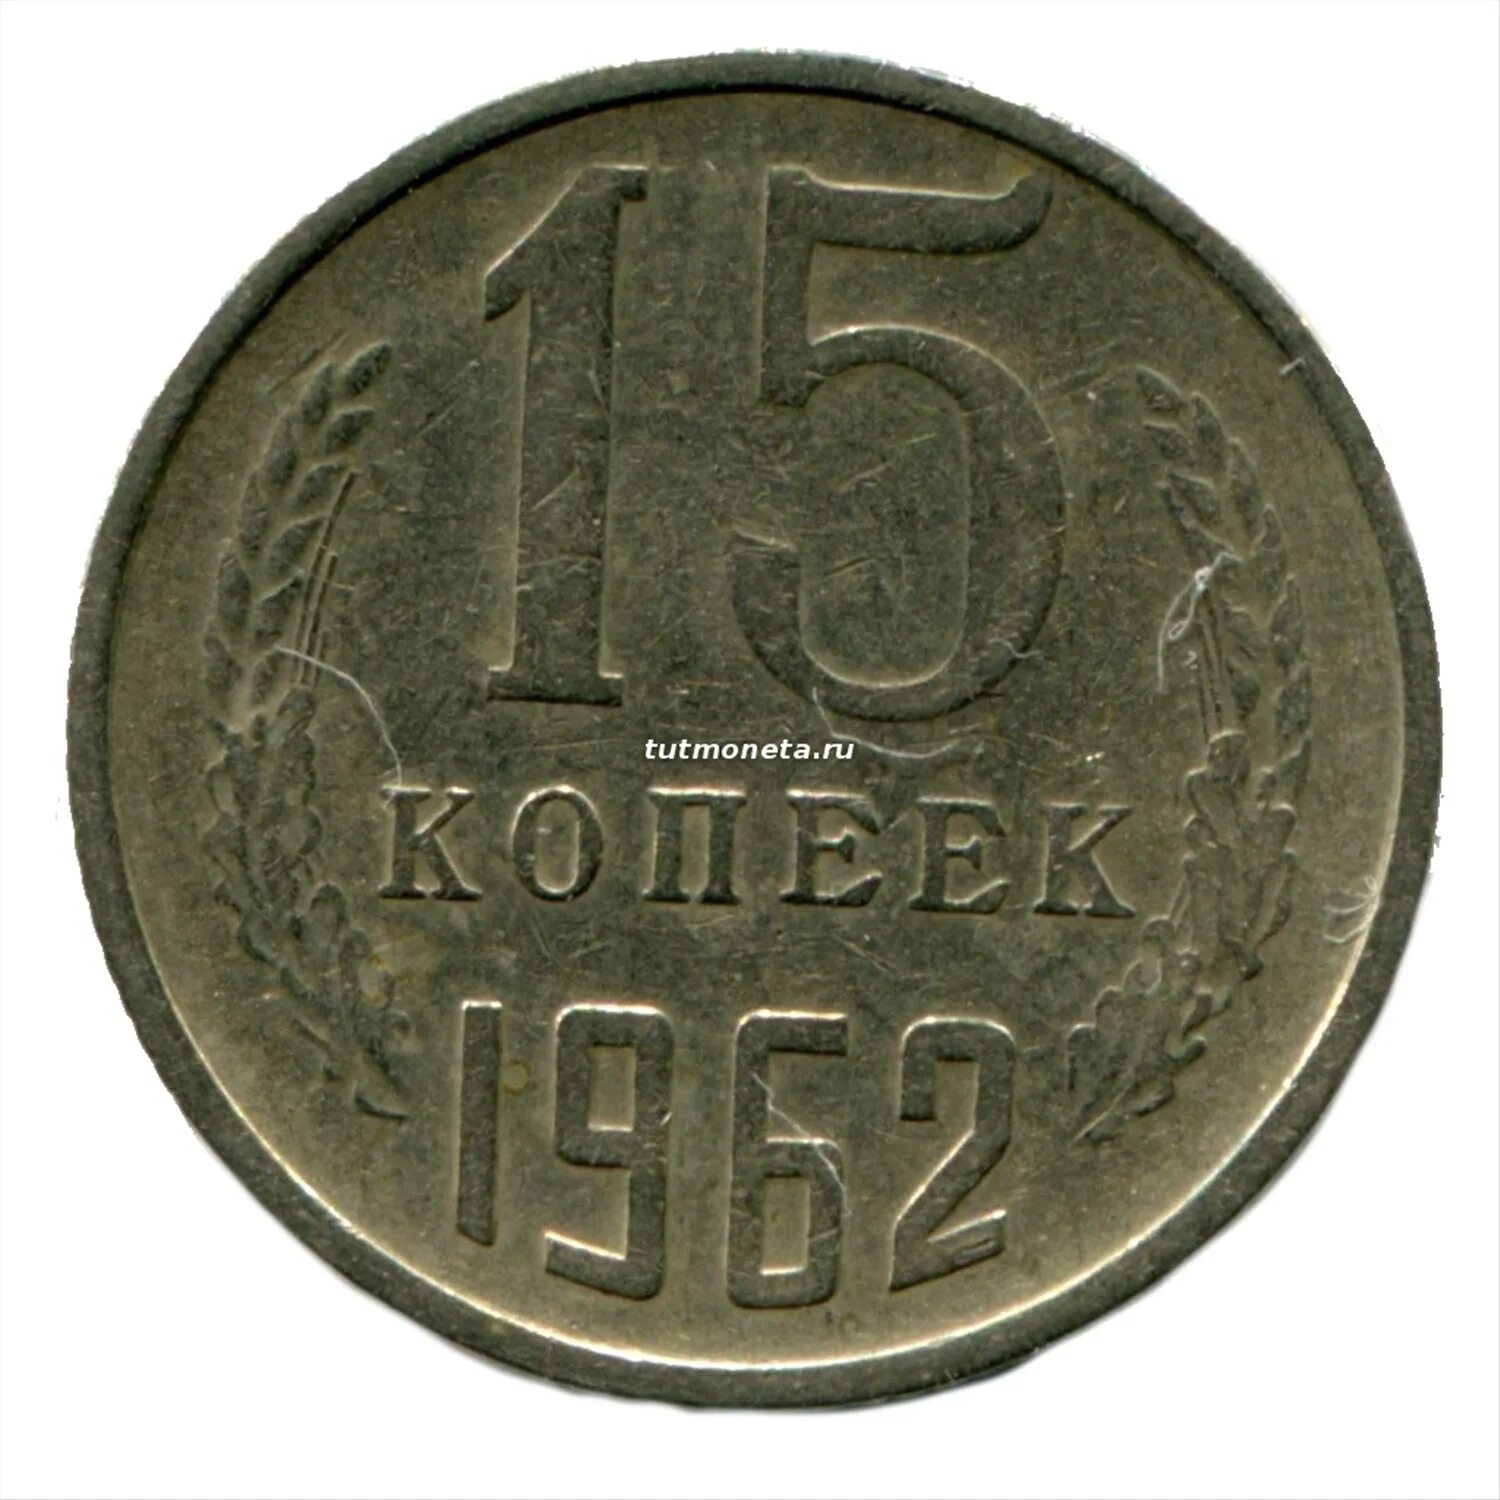 Пятнадцать копеек. 15 Копеек 1961. 15 Копеек СССР 1961. СССР 2 копейки 1961.